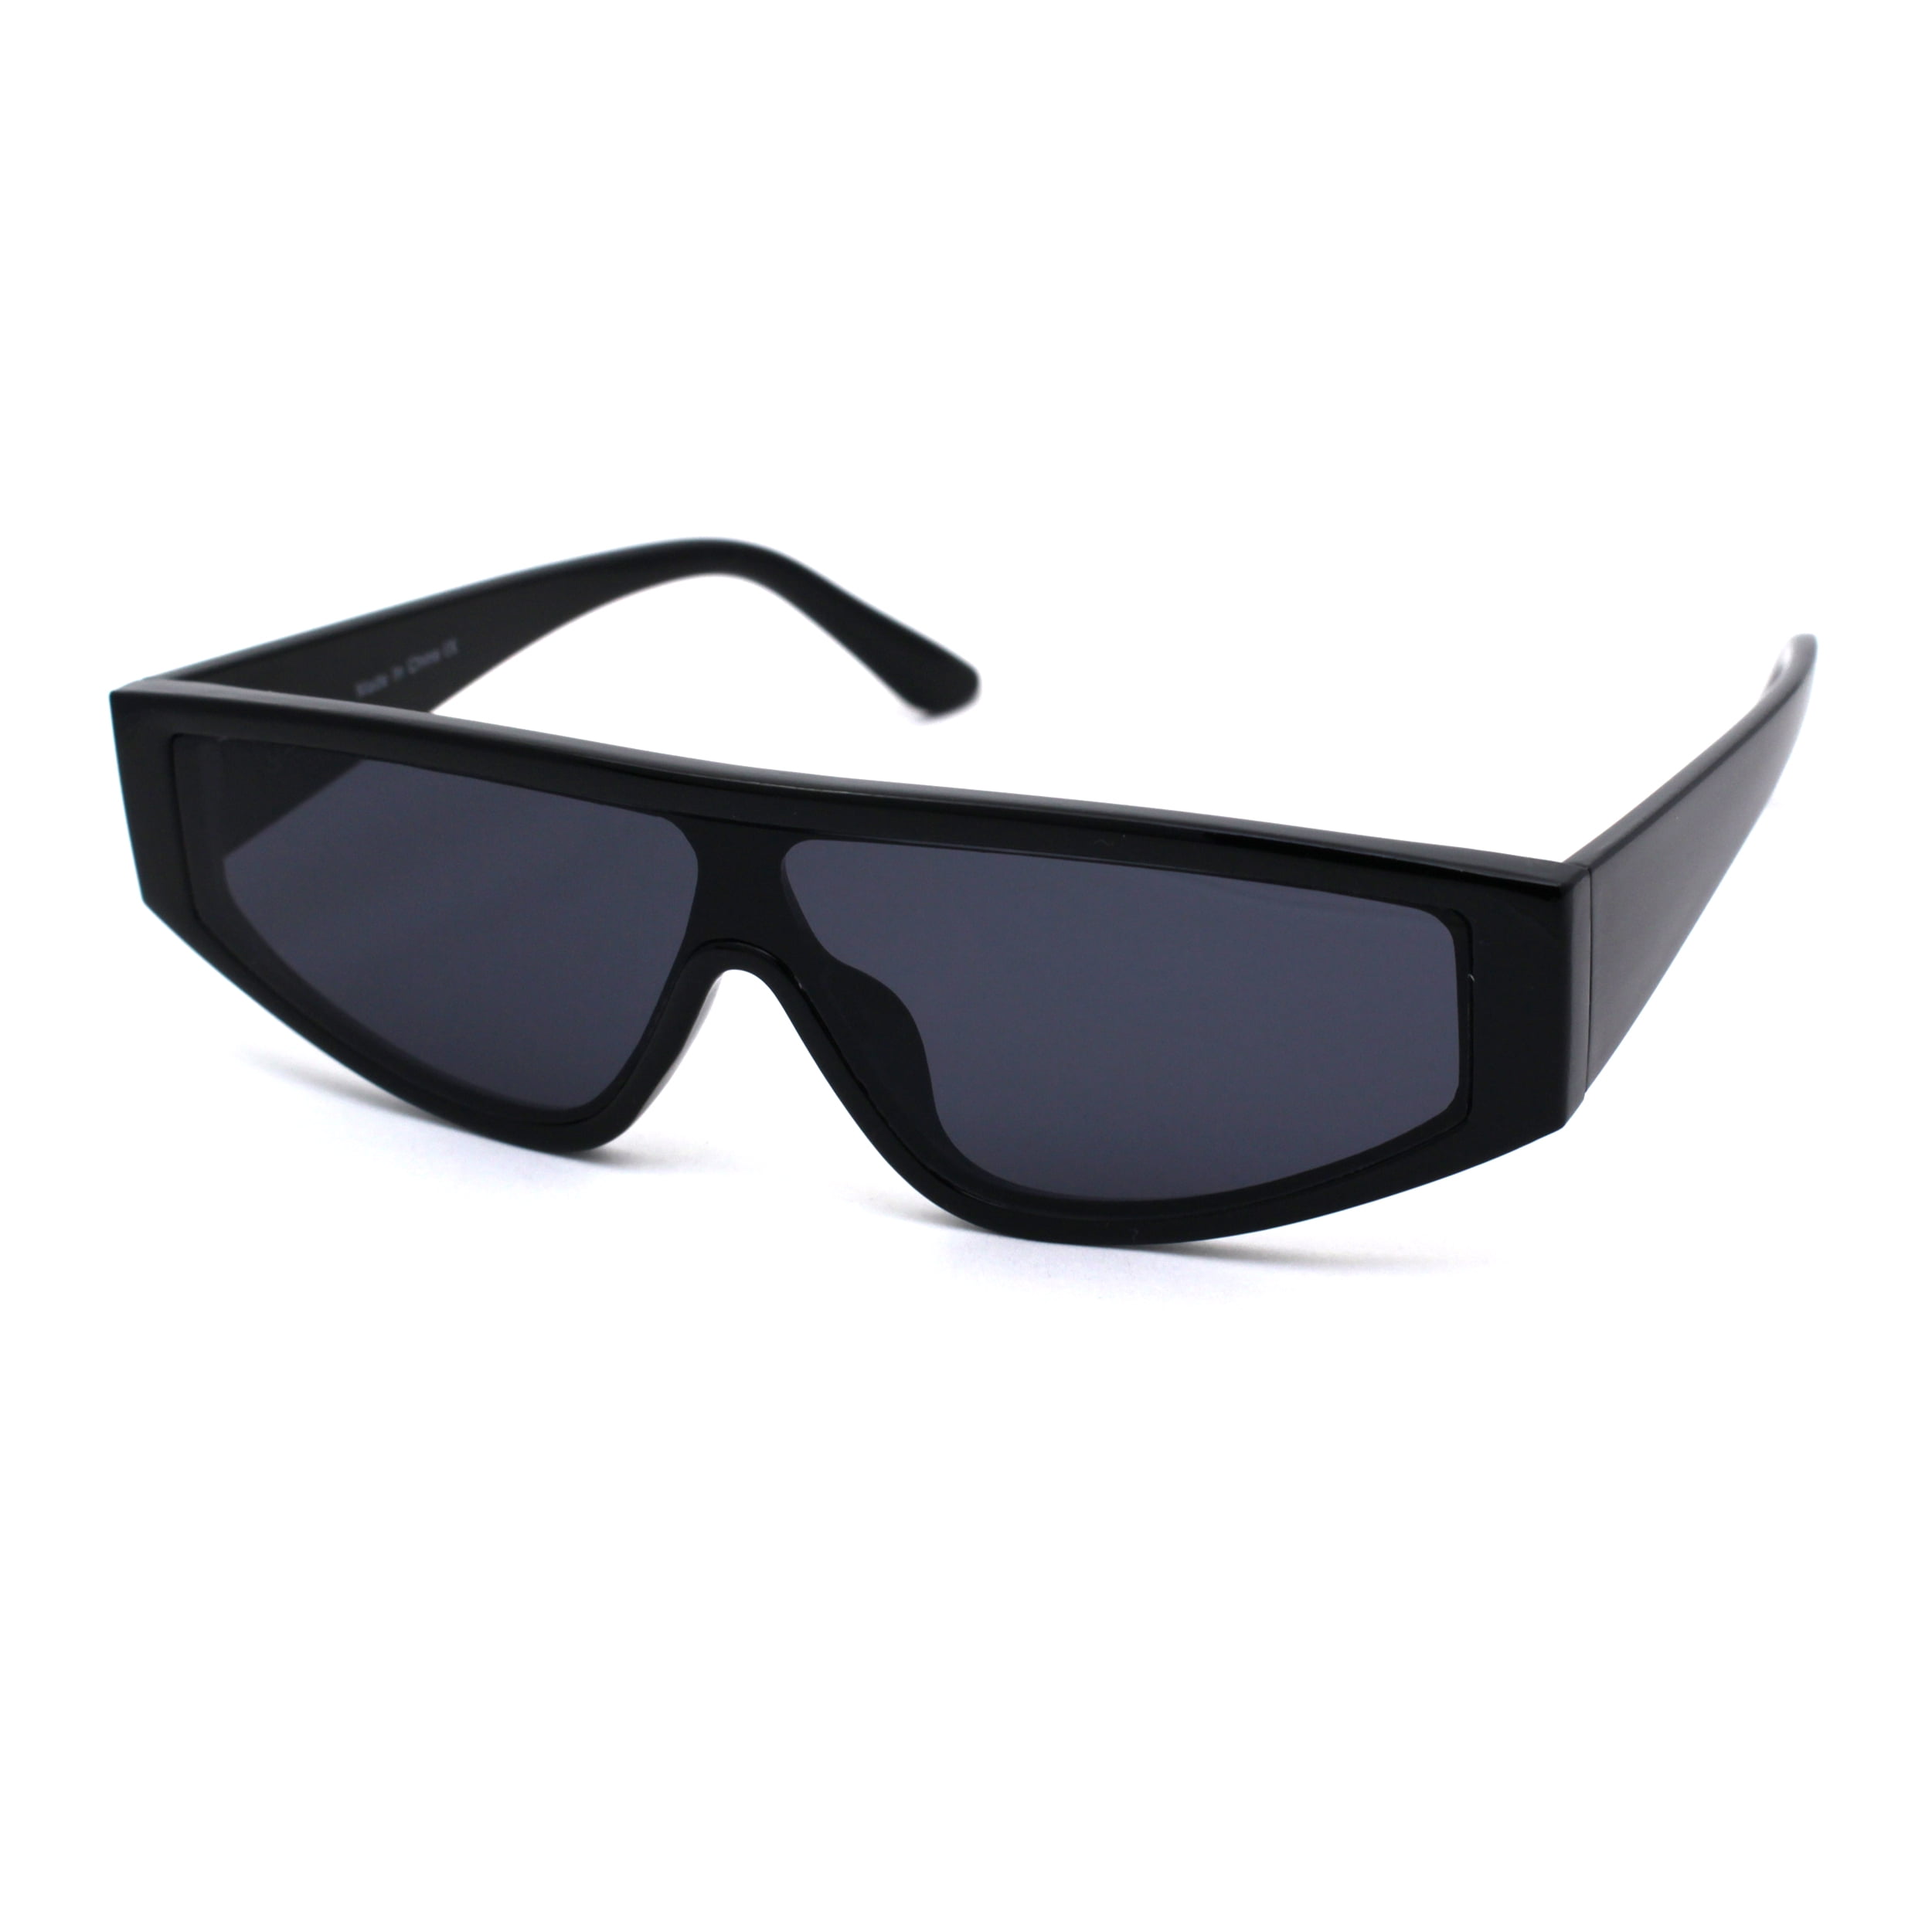 Sunglasses Funky Top Narrow Retro 80s Plastic Flat Shield Black All